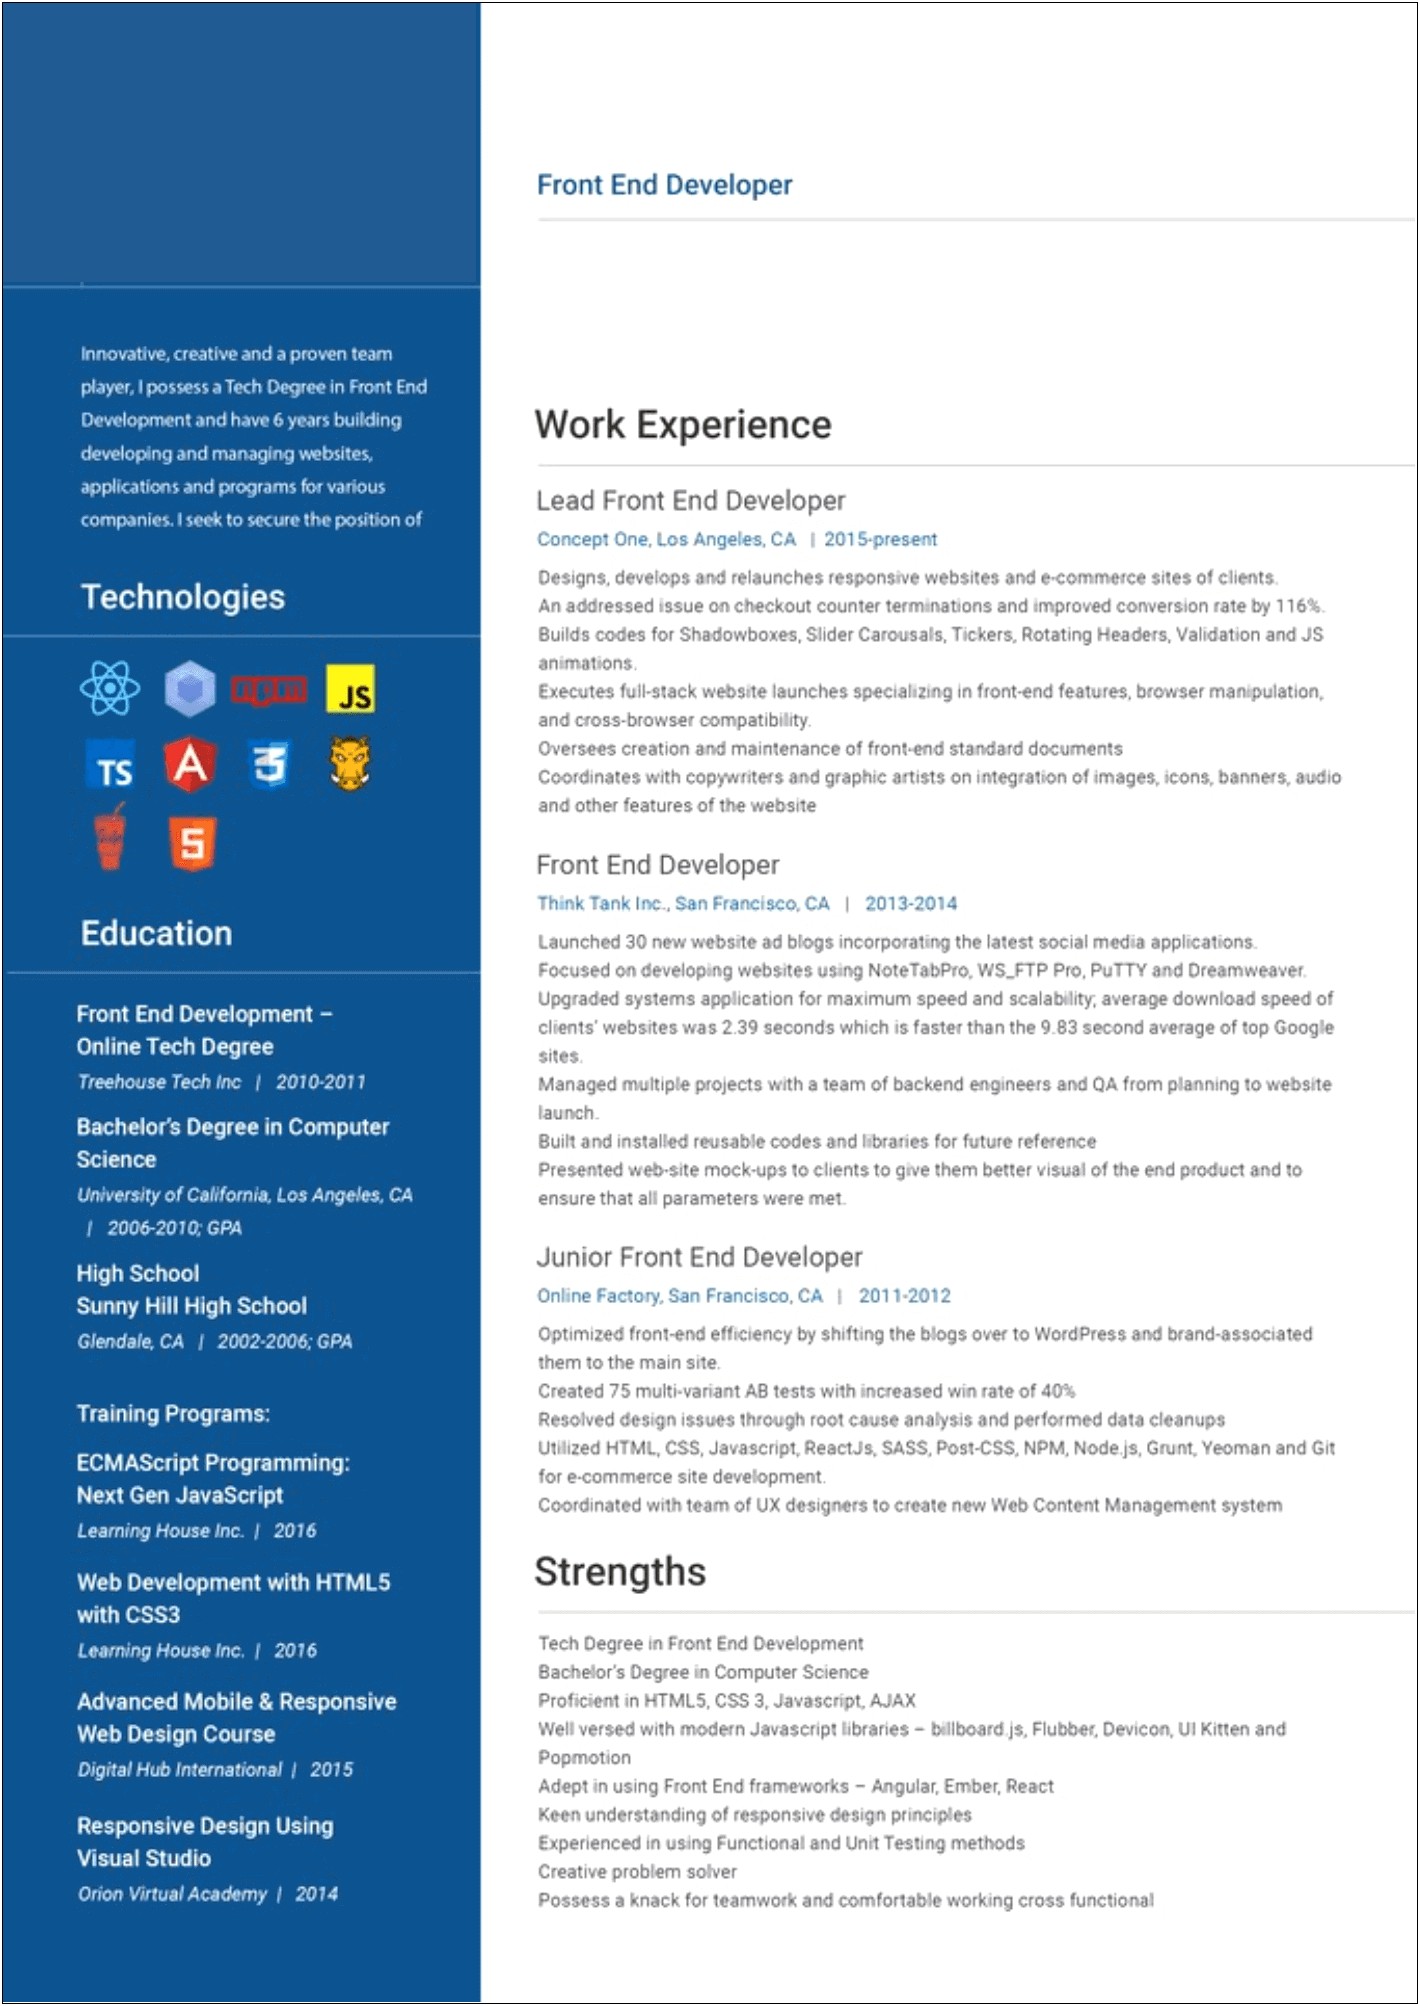 Sample Web Development Tech Resume